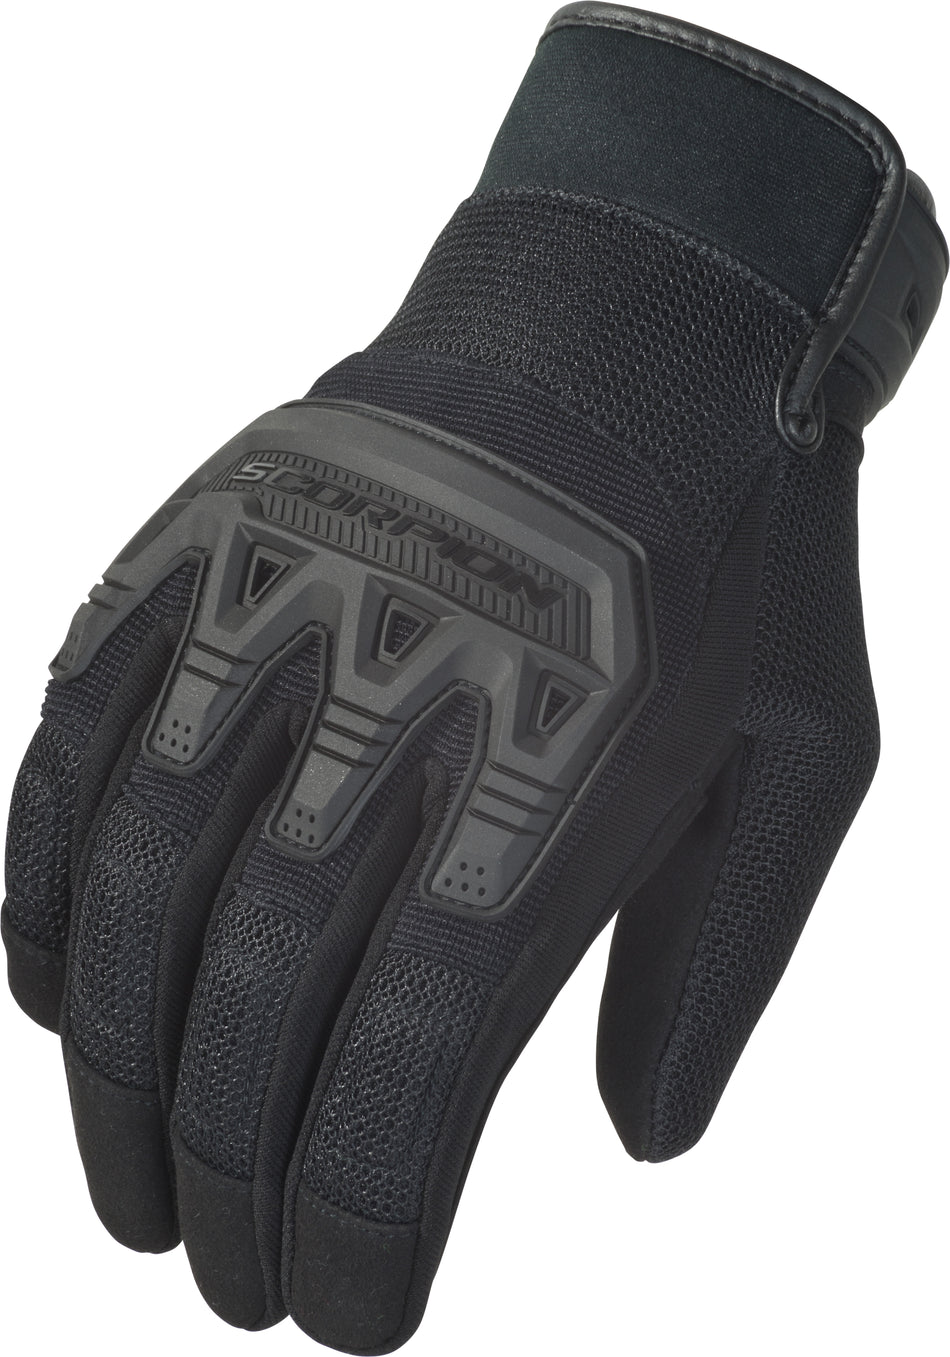 SCORPION EXO Covert Tactical Gloves Black 2x G32-037